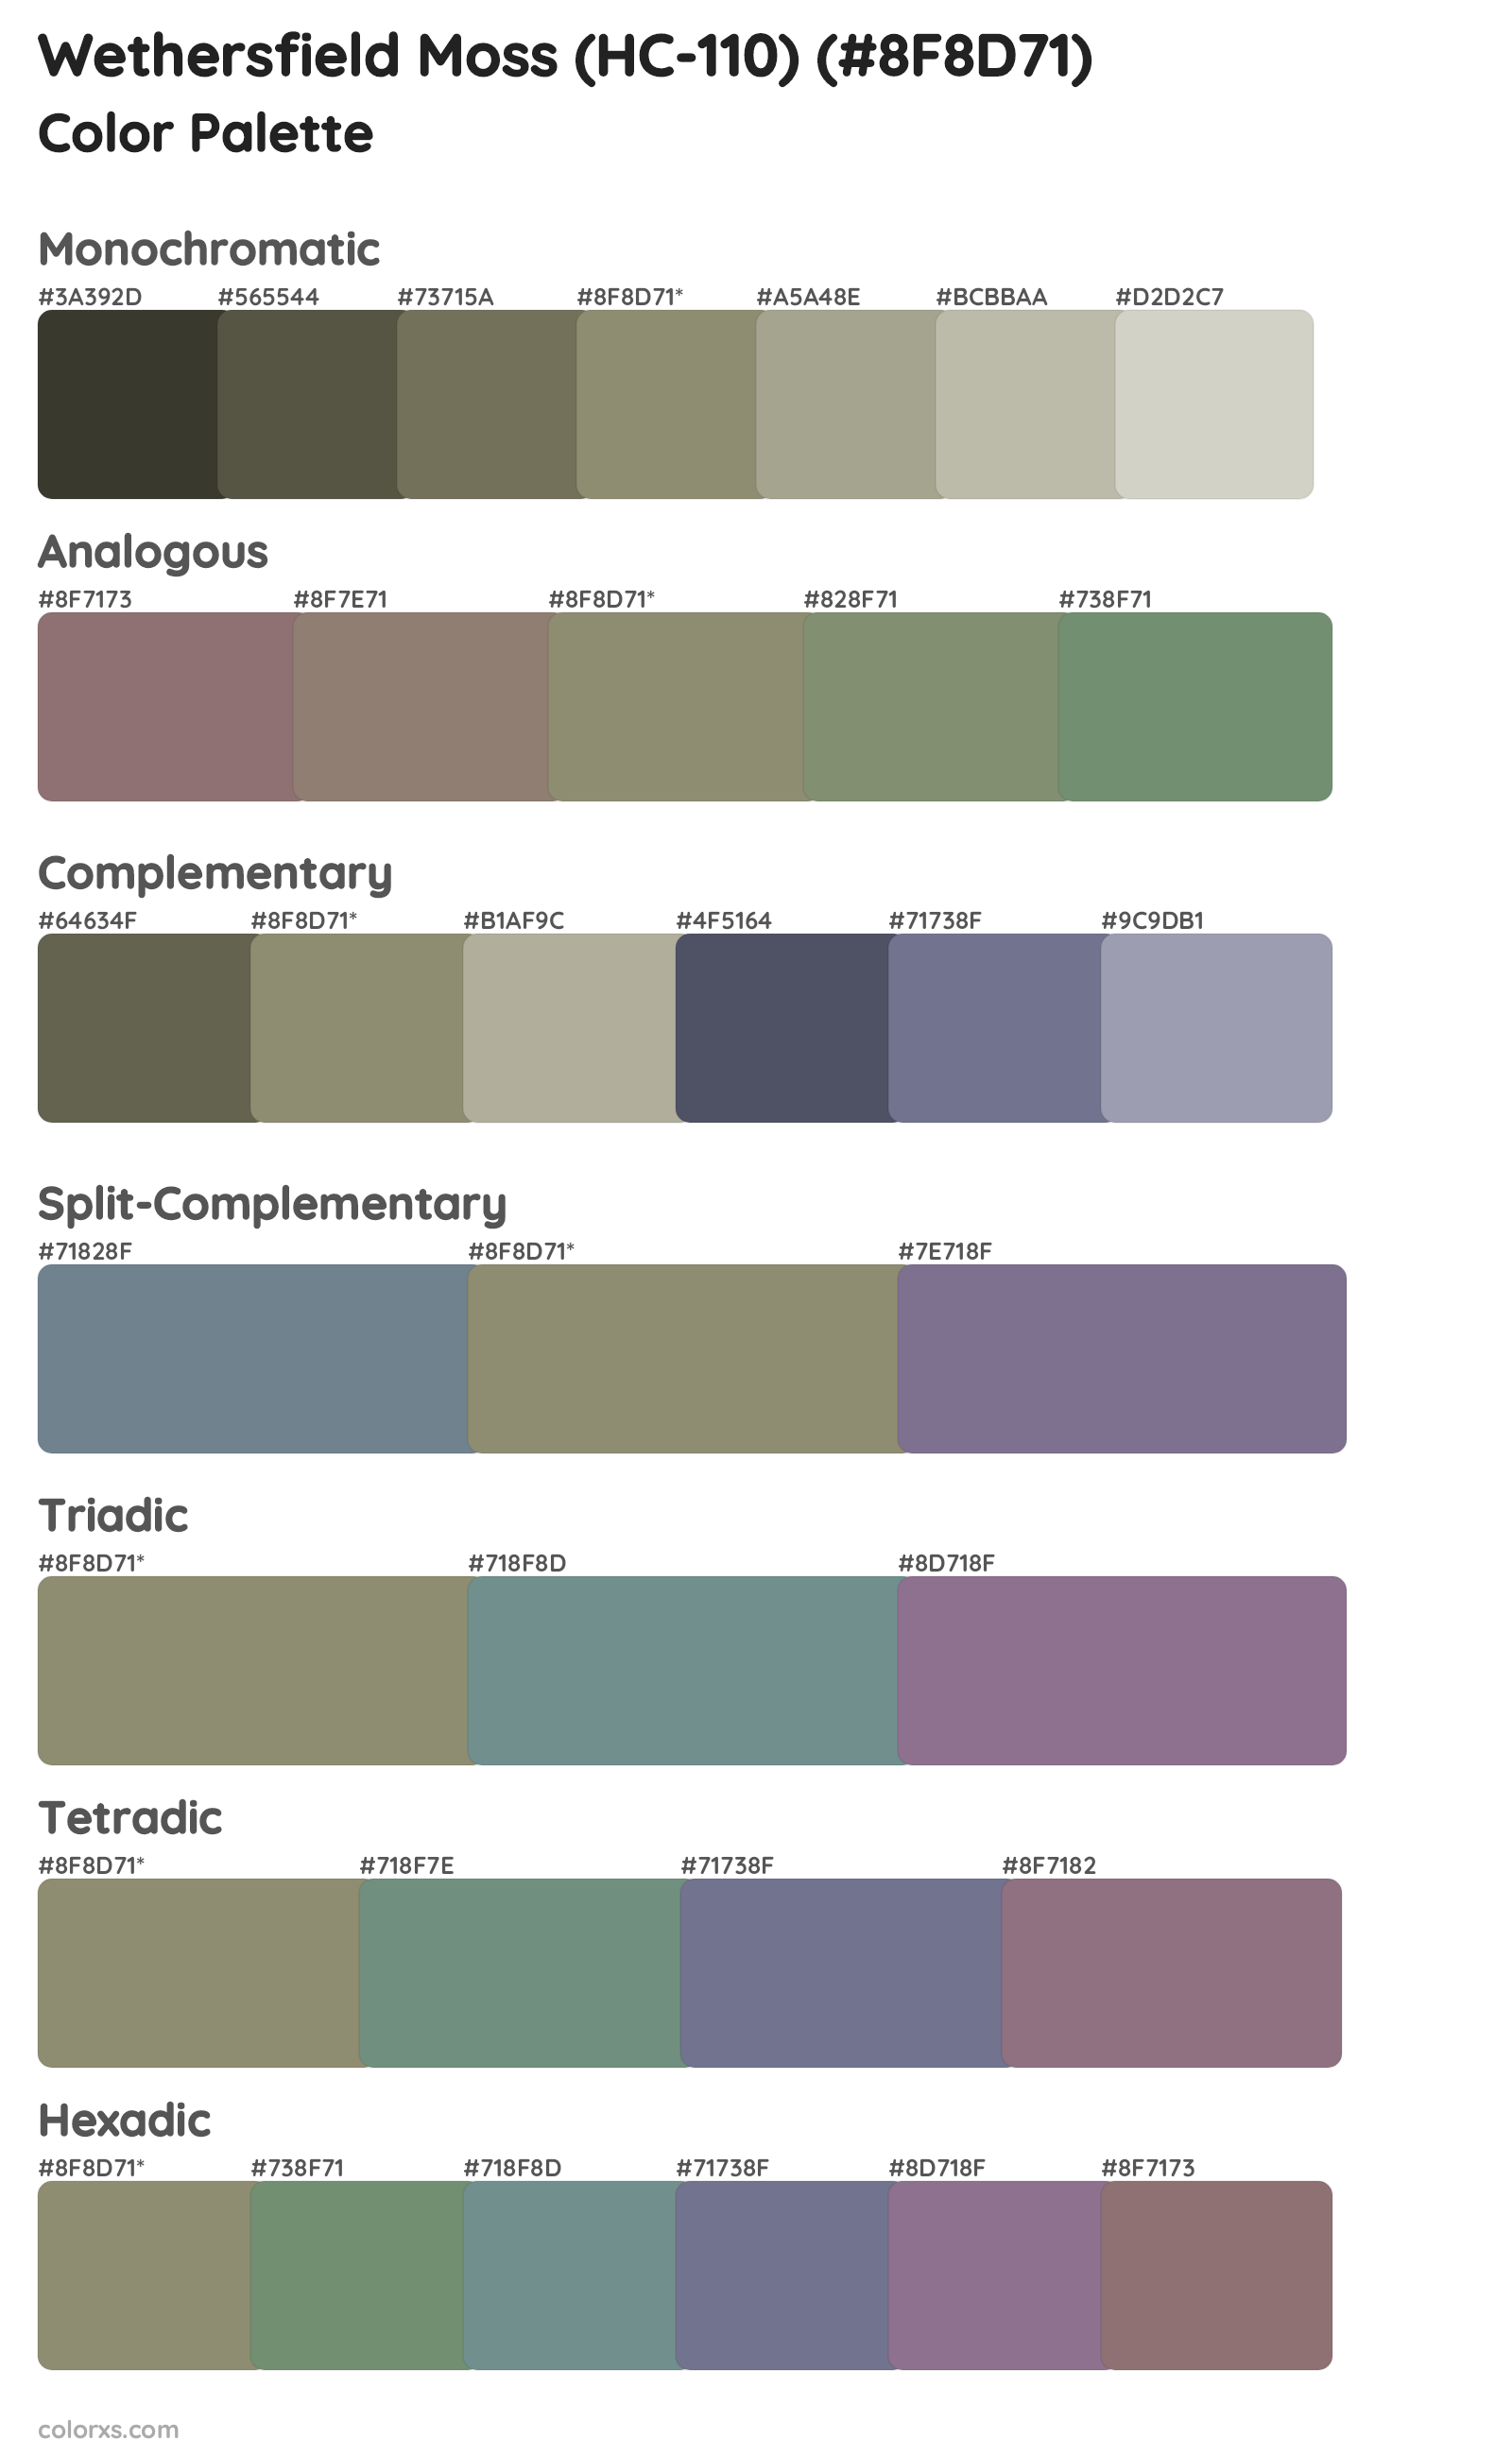 Wethersfield Moss (HC-110) Color Scheme Palettes